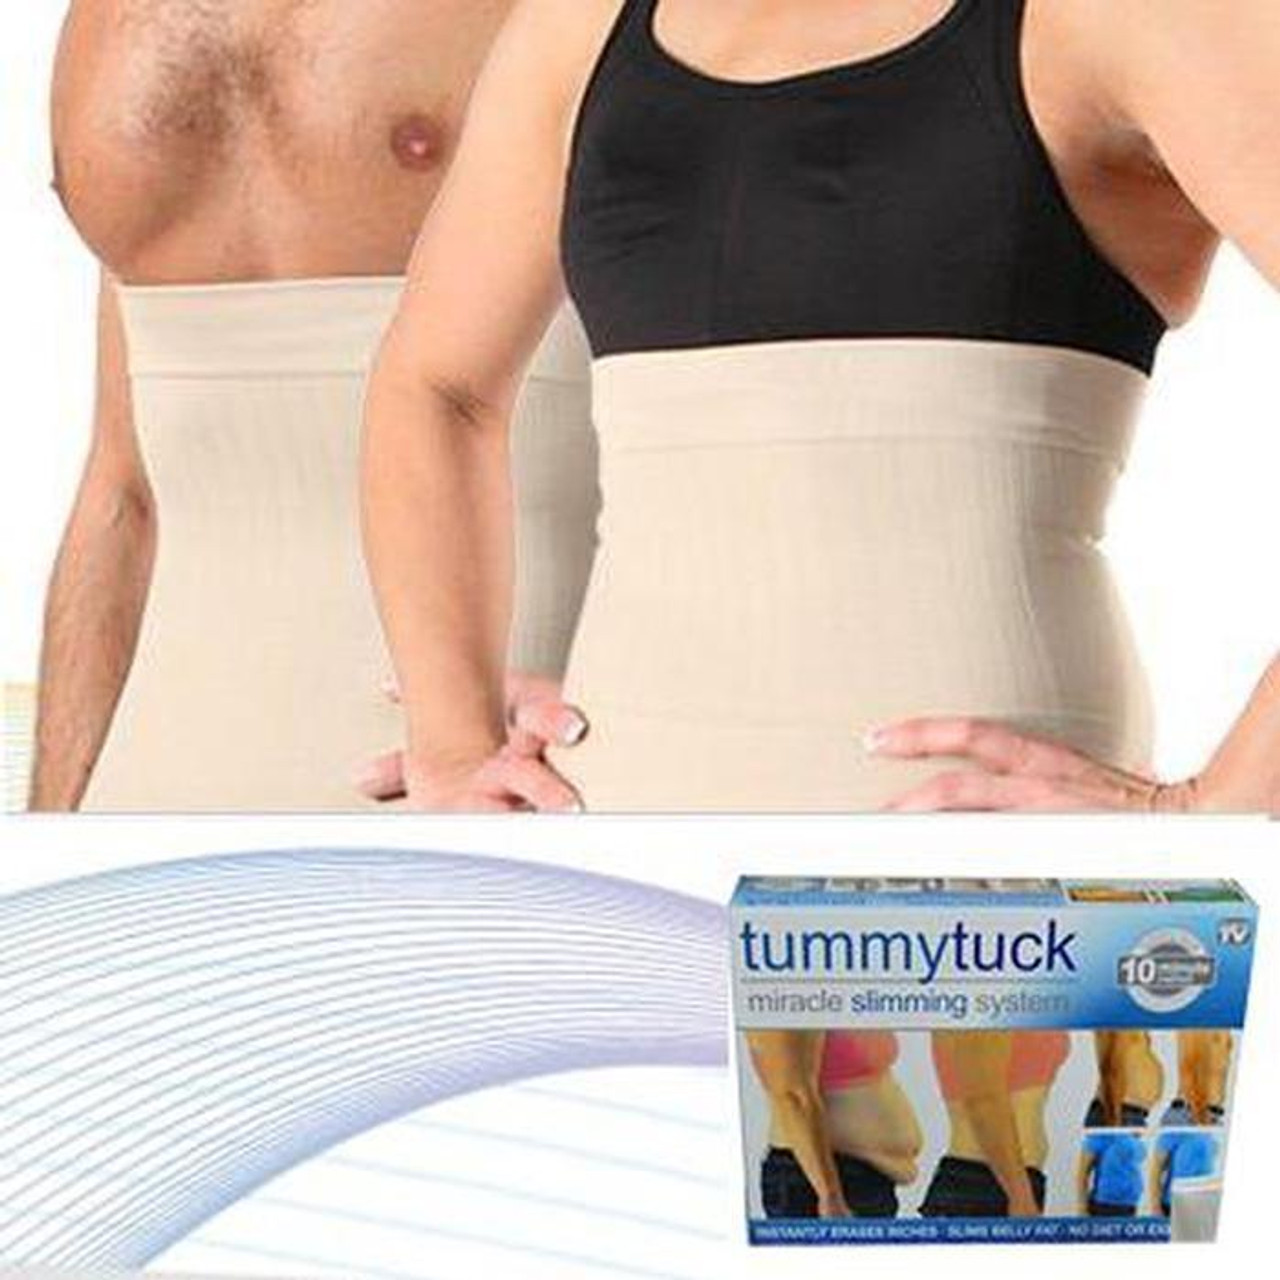 Buy Tummy Tuck Belt online